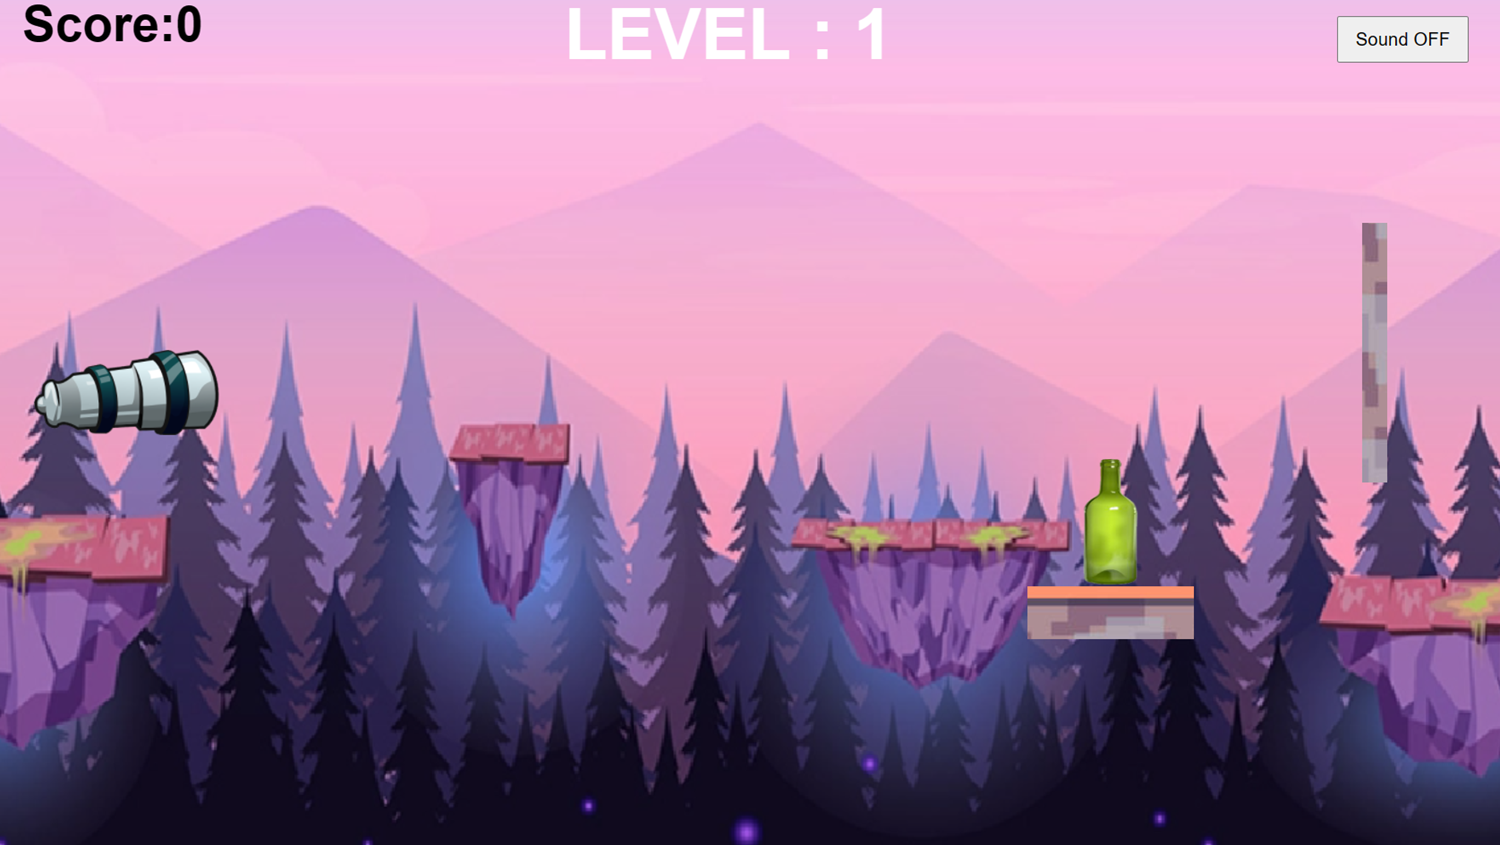 Bottle Smash Game Level Start Screenshot.